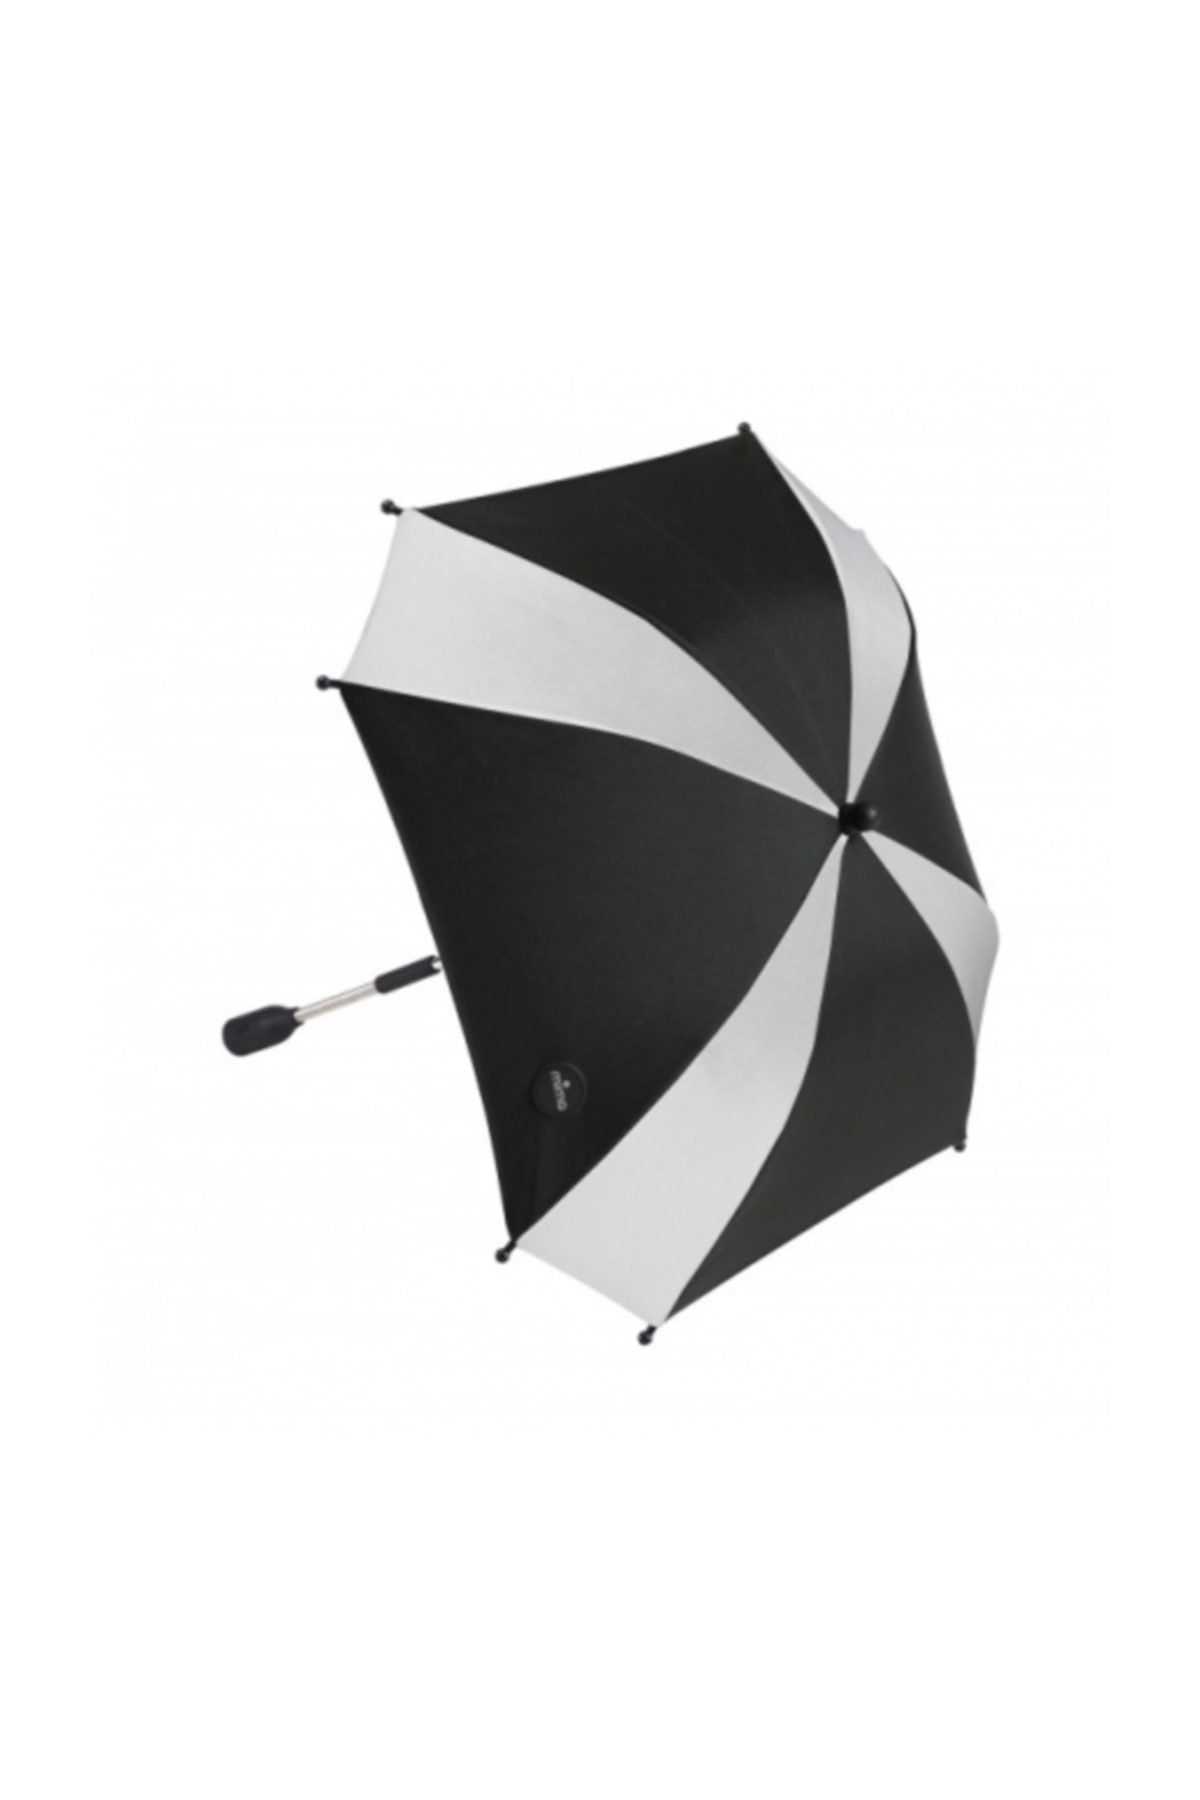 Mima Puset Şemsiyesi/ Black & White